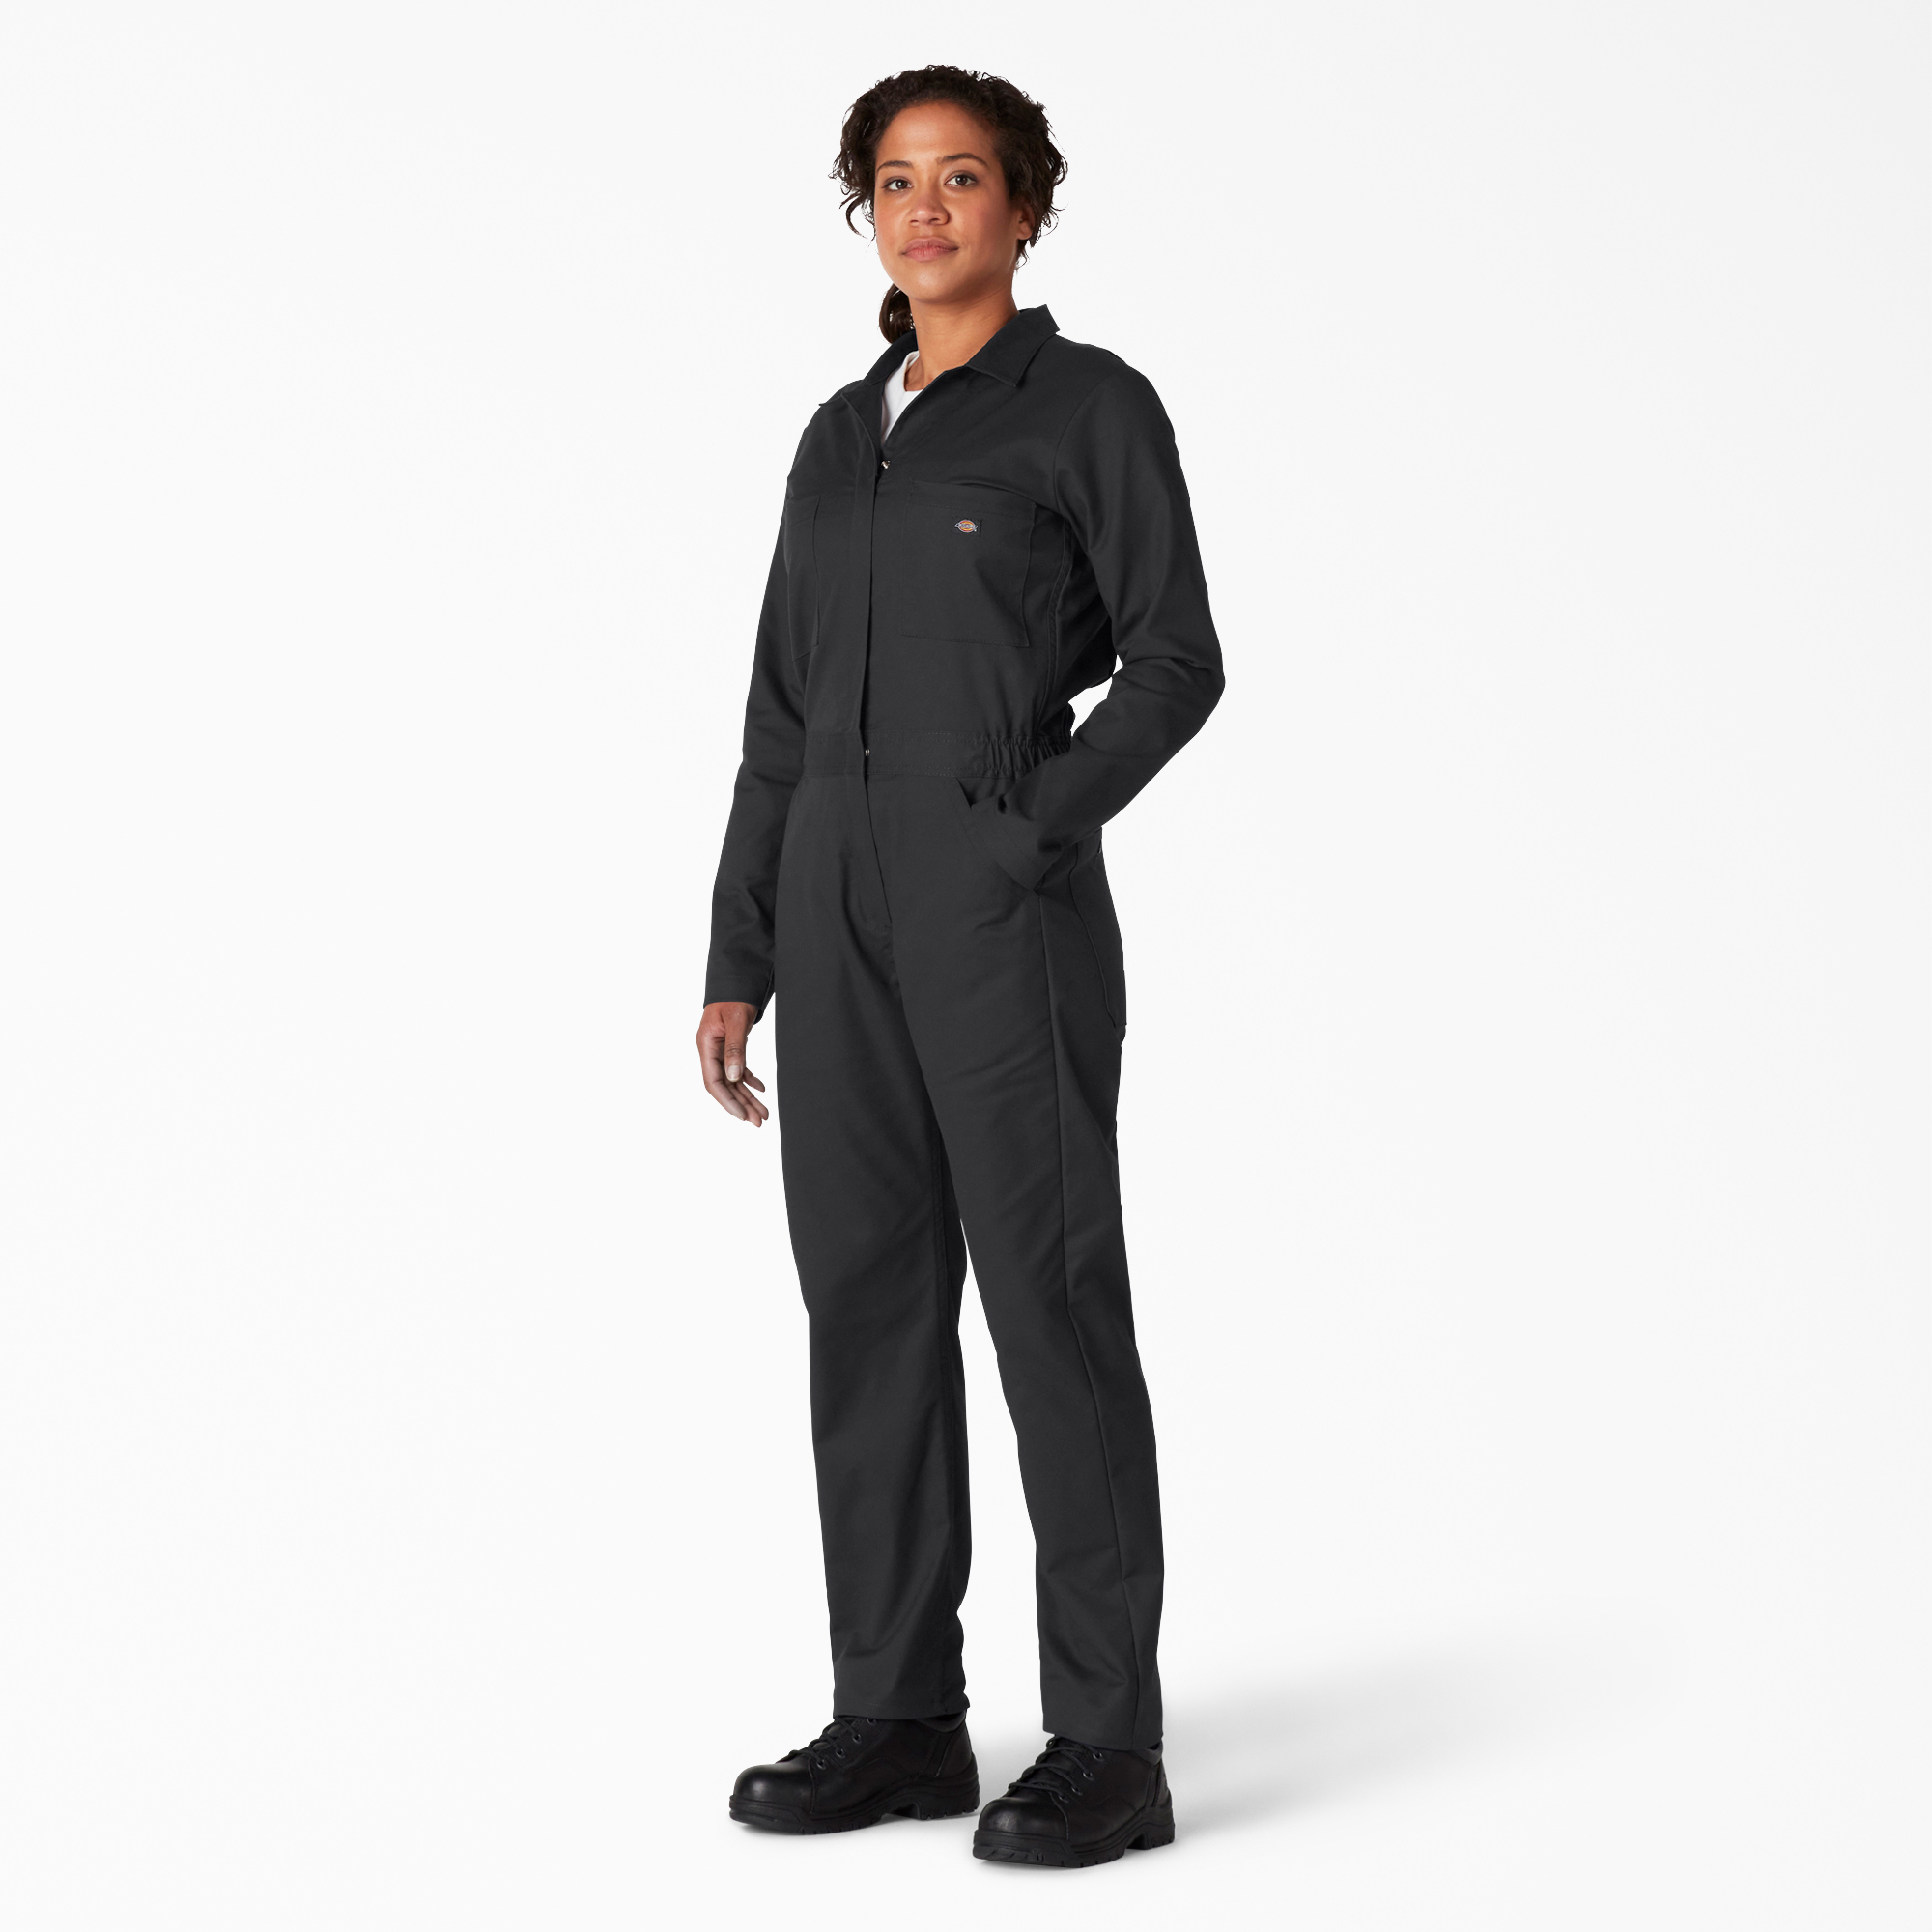 Women's FLEX Cooling Long Sleeve Coveralls - Black (BK)